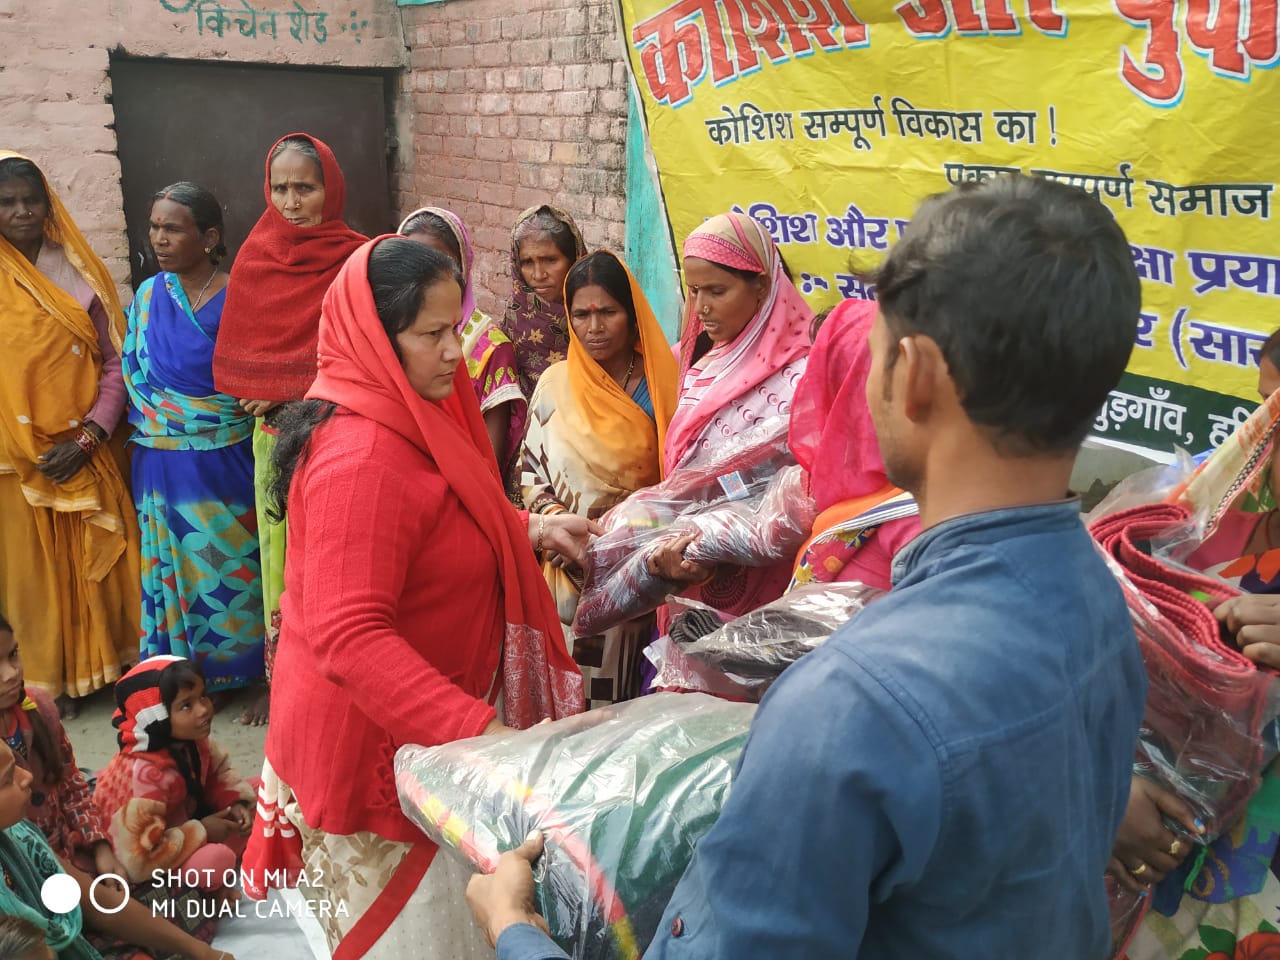 Blanket distribution by KAP team to needy people on 15.12.2019